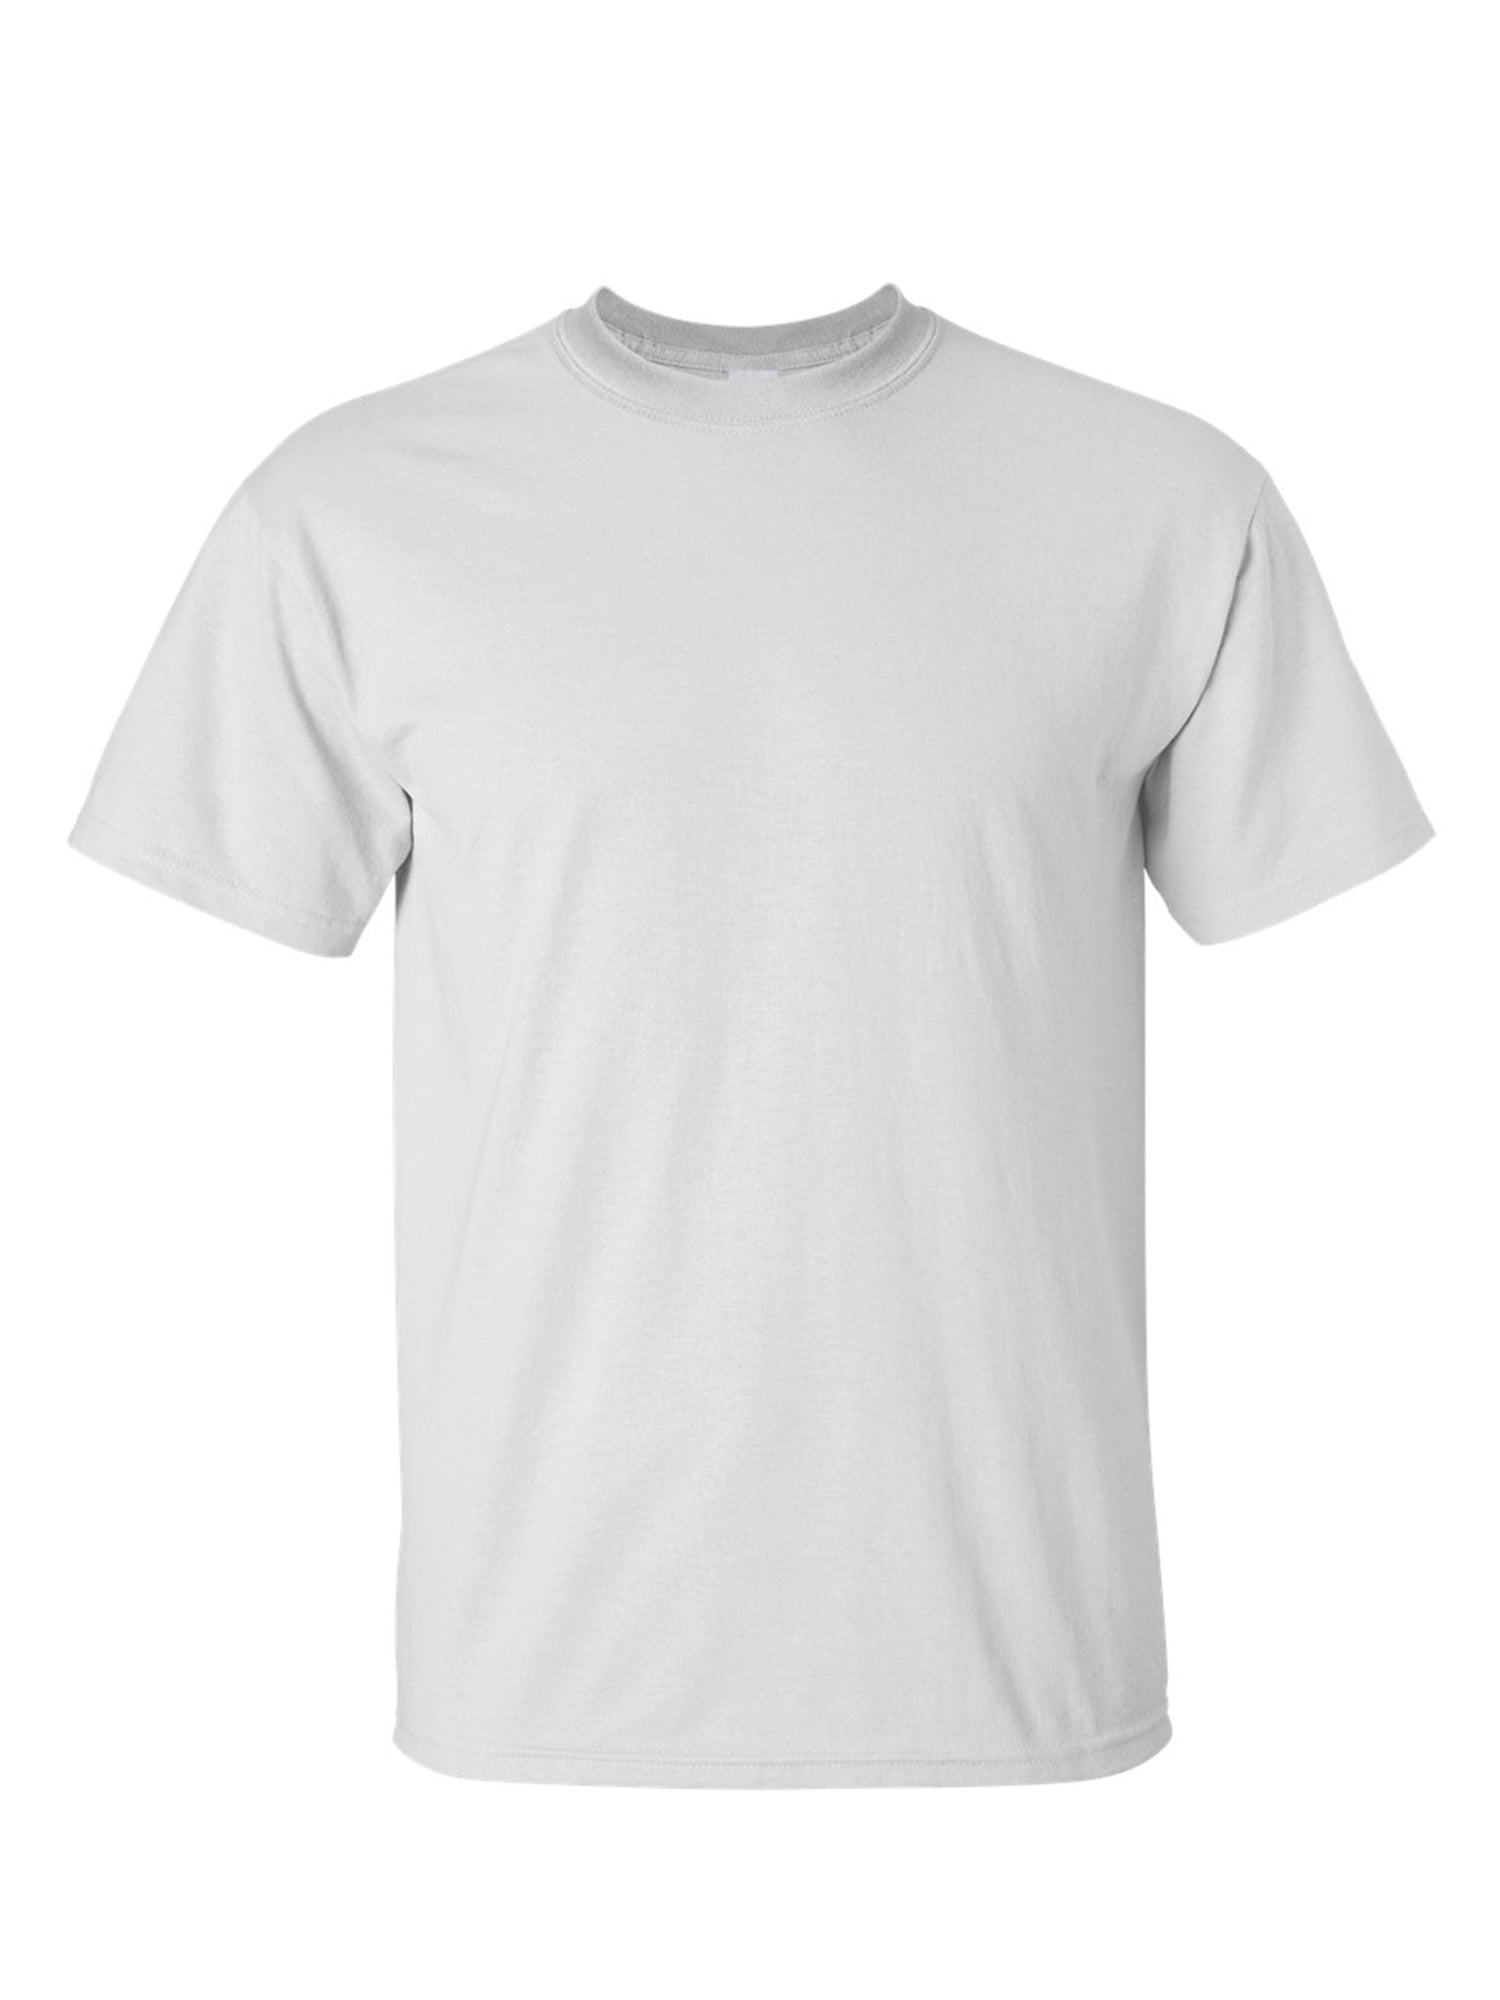 Navy T shirts XLT T Shirts for 2XLT 3XLT Big & Tall T Shirts Tall Shirts Big & Tall T Shirts Big and Tall T Shirt for Men Tall Sizes